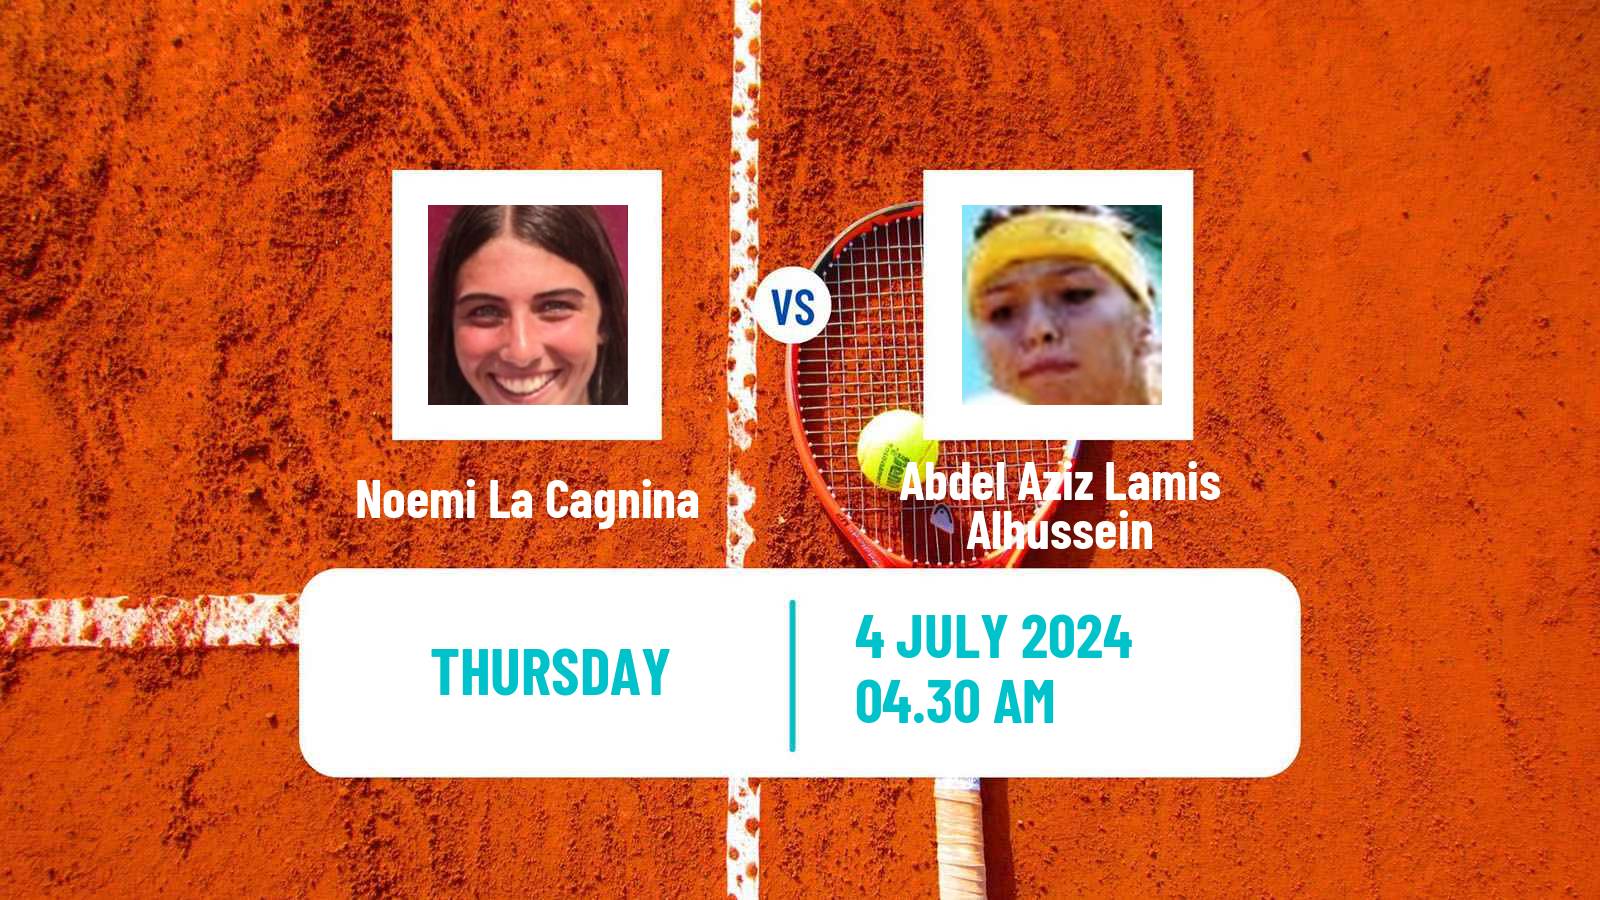 Tennis ITF W15 Monastir 25 Women Noemi La Cagnina - Abdel Aziz Lamis Alhussein